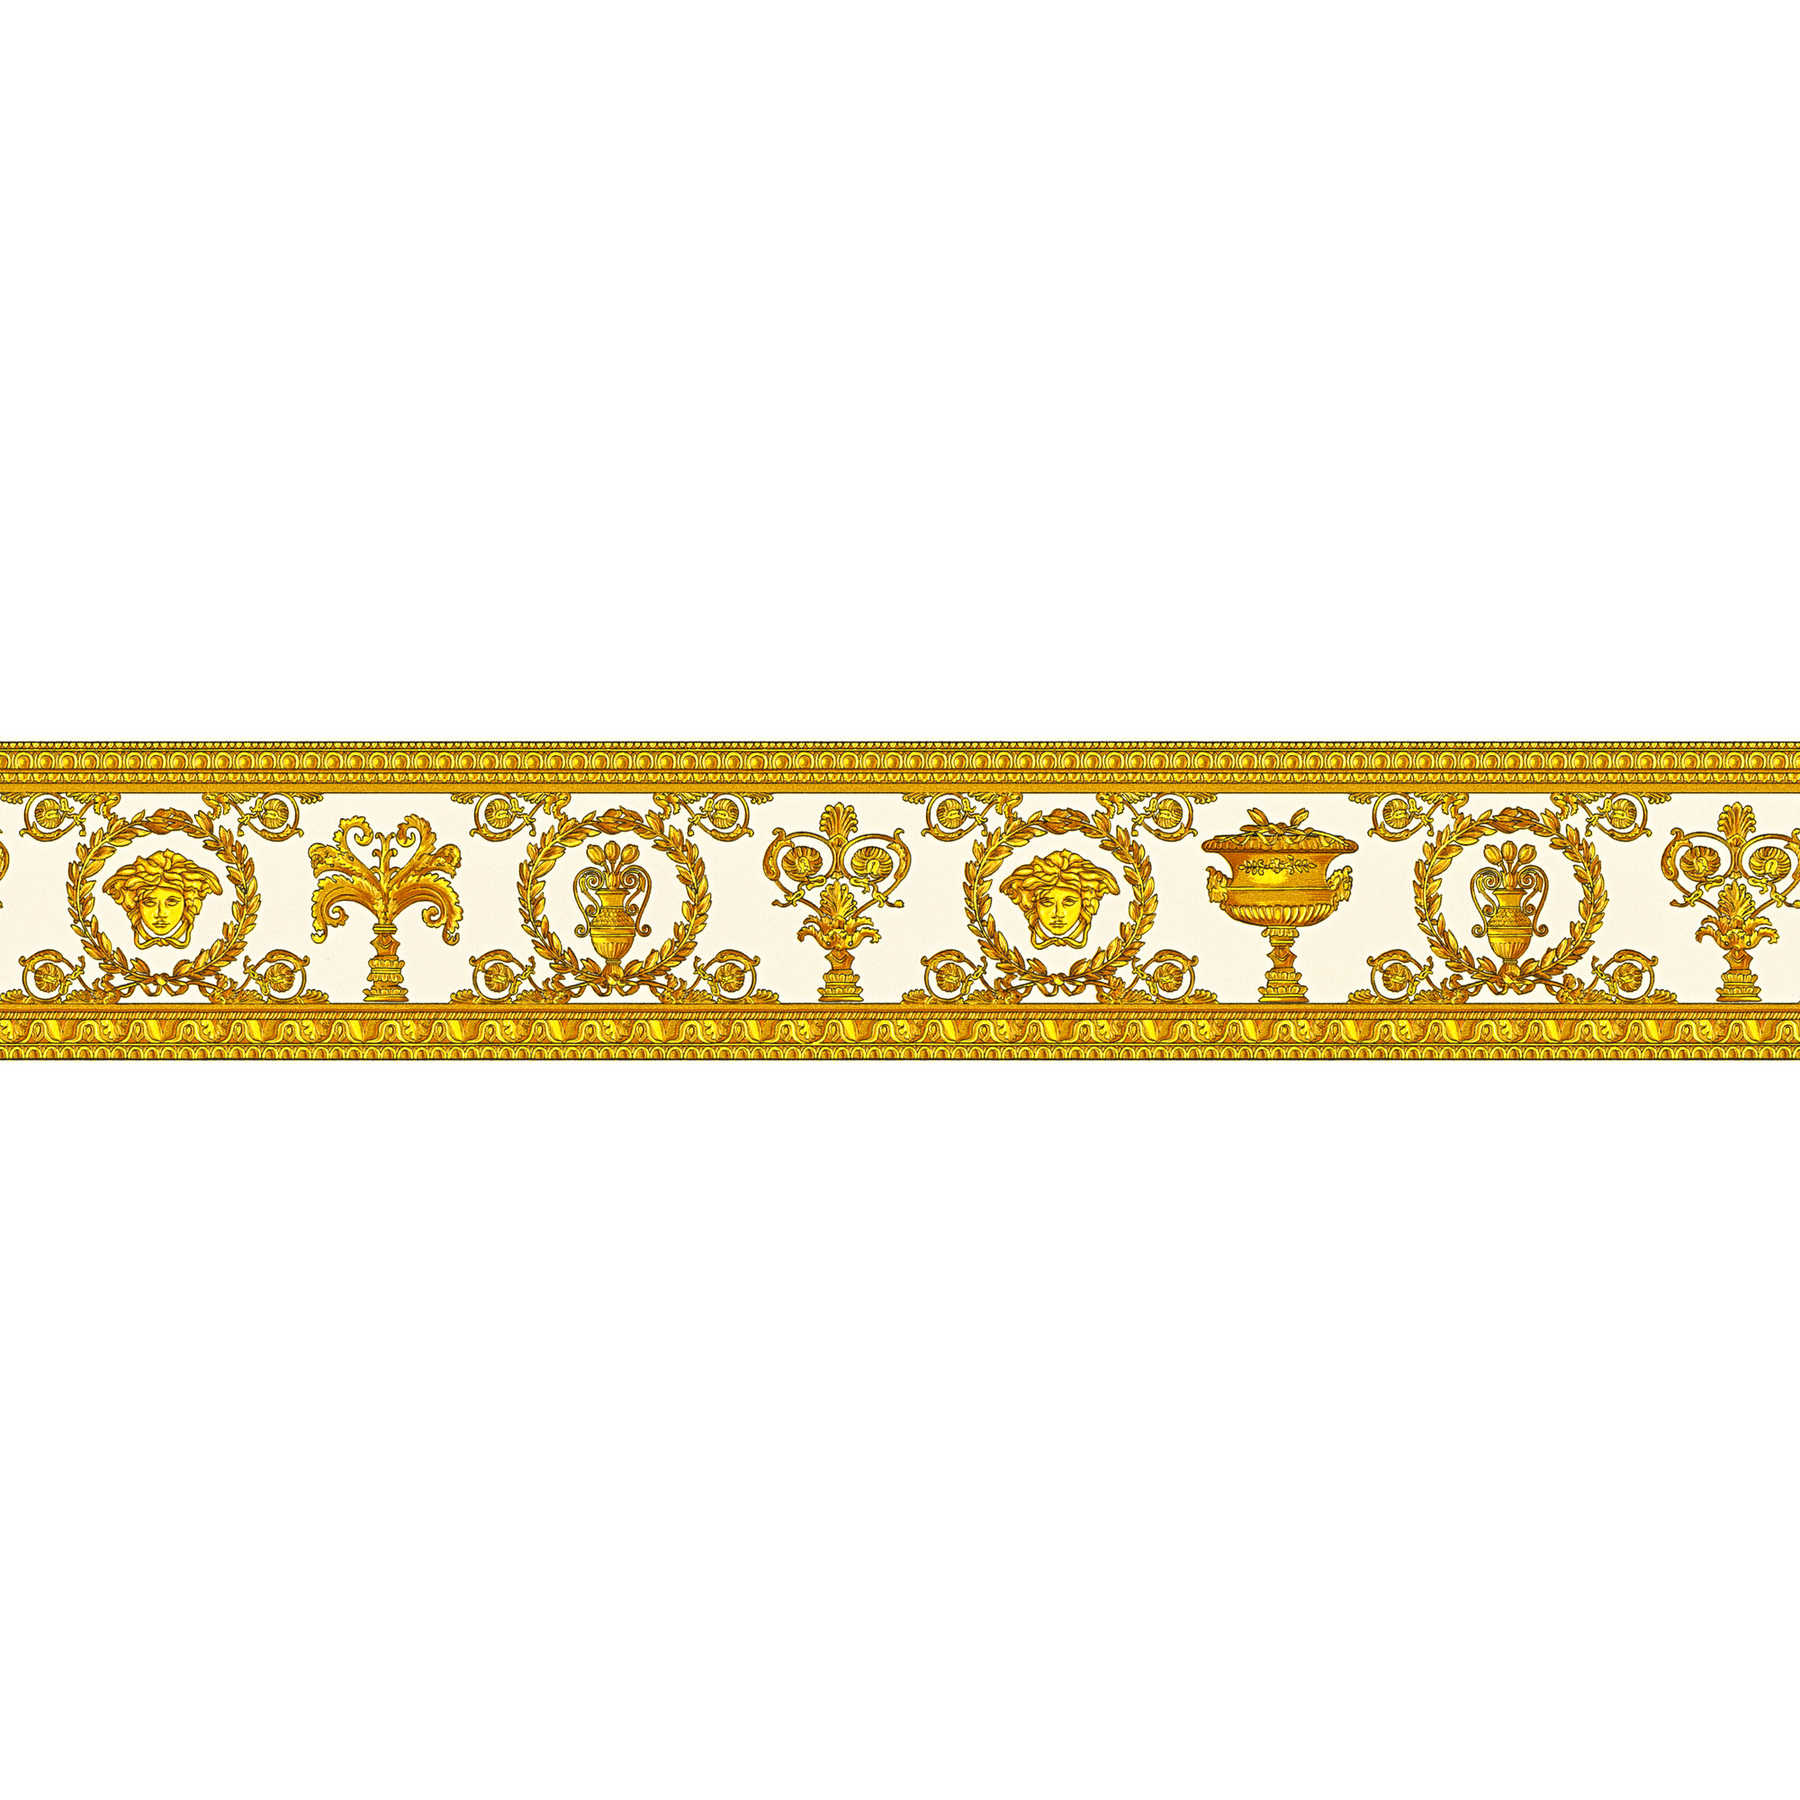             Papel pintado VERSACE Borde dorado - Metalizado
        